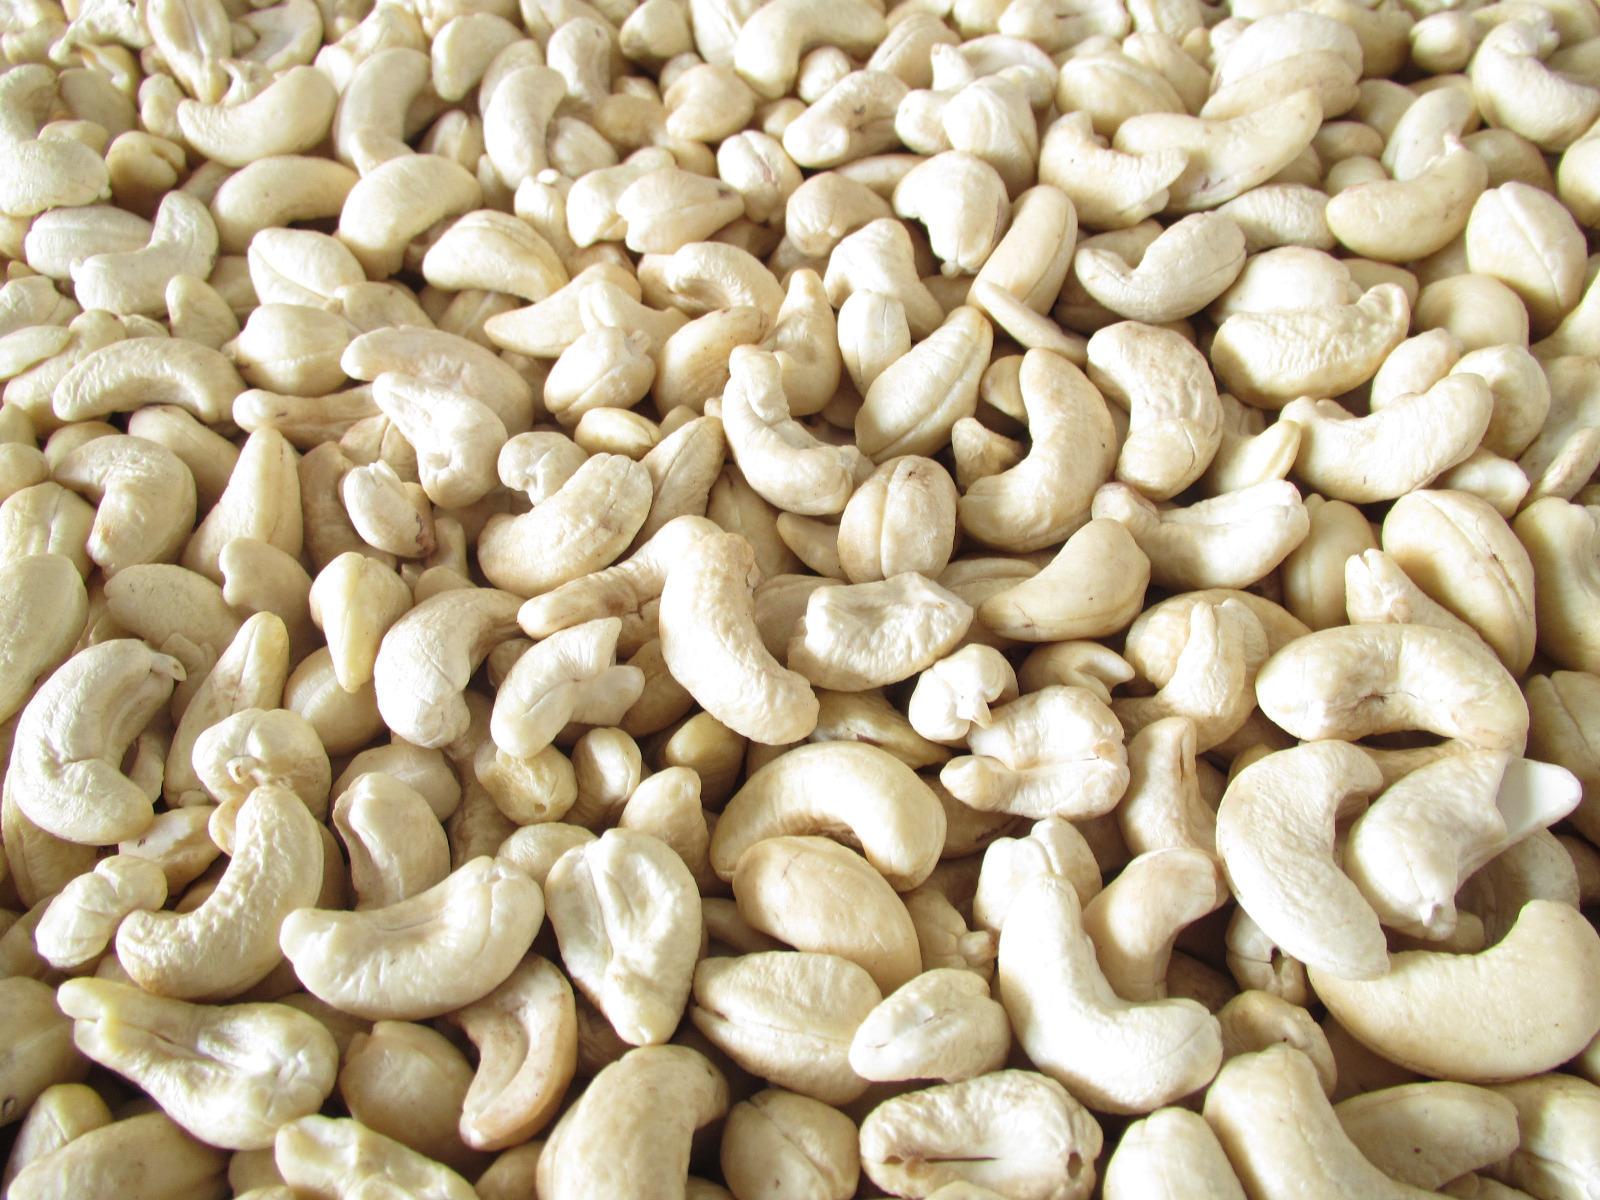 Vietnam cashew industry in distress as demand falls